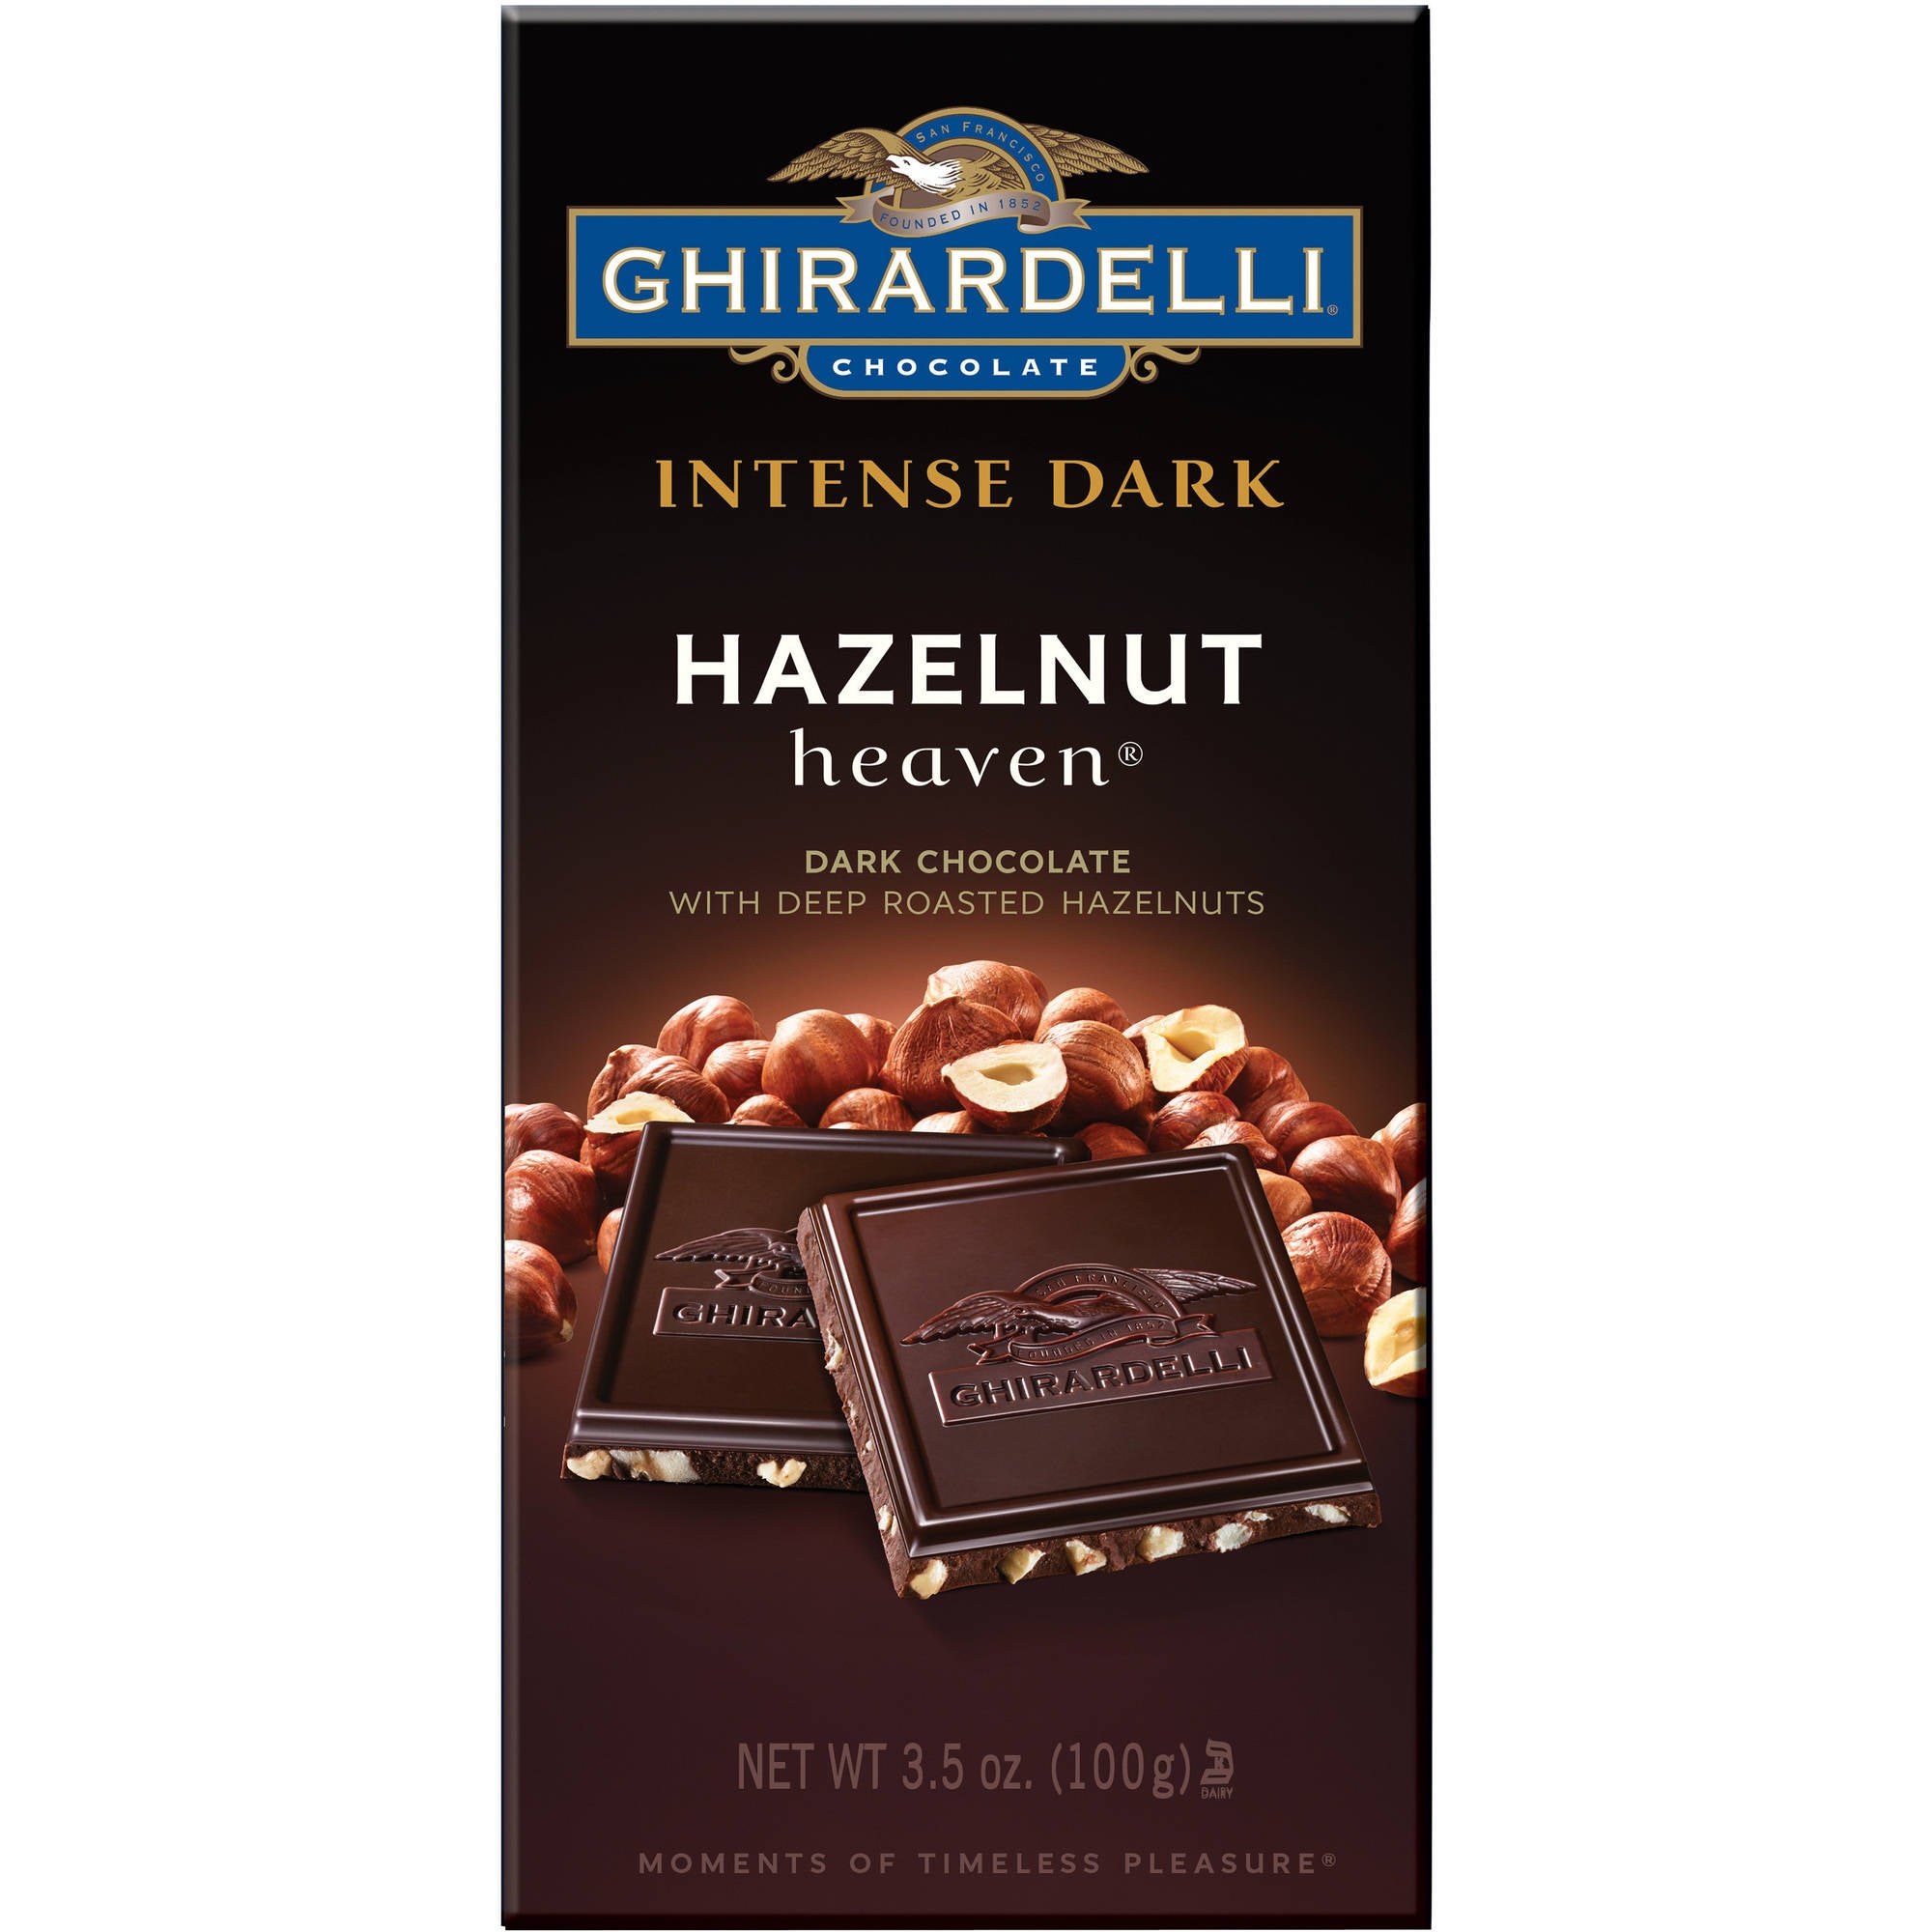 Ghirardelli Intense Dark Hazelnut Heaven Dark Chocolate with Roasted Hazelnuts, 3.5oz